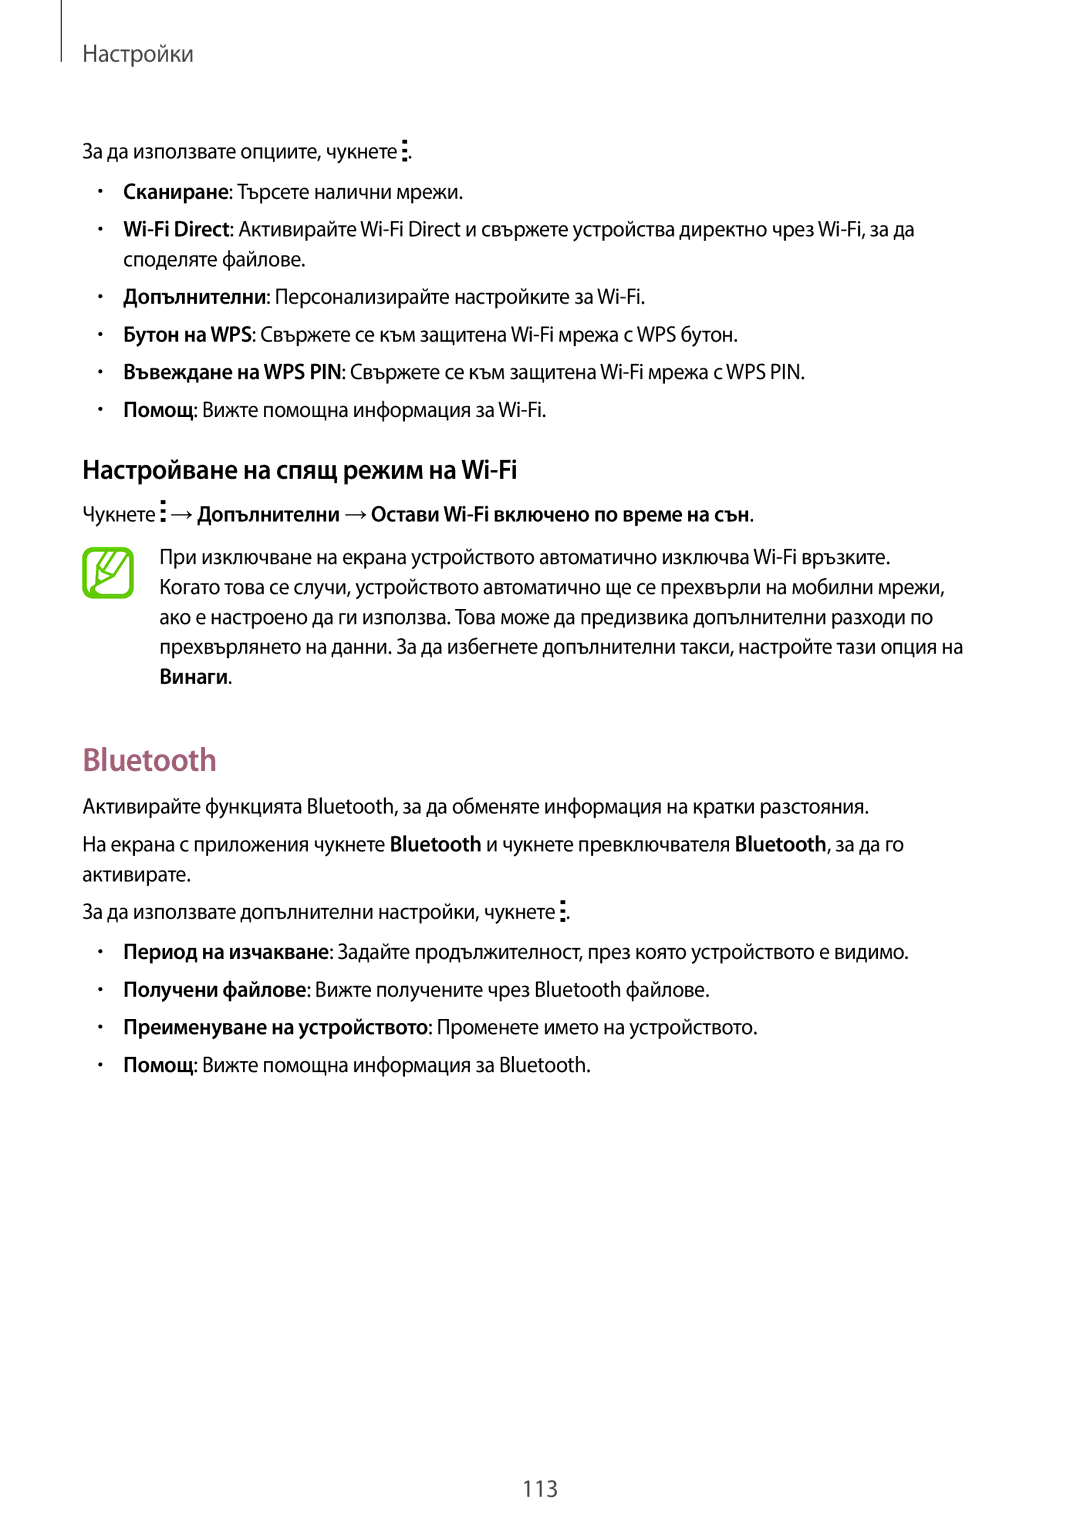 Samsung SM-A500FZDUBGL manual Bluetooth, Настройване на спящ режим на Wi-Fi 